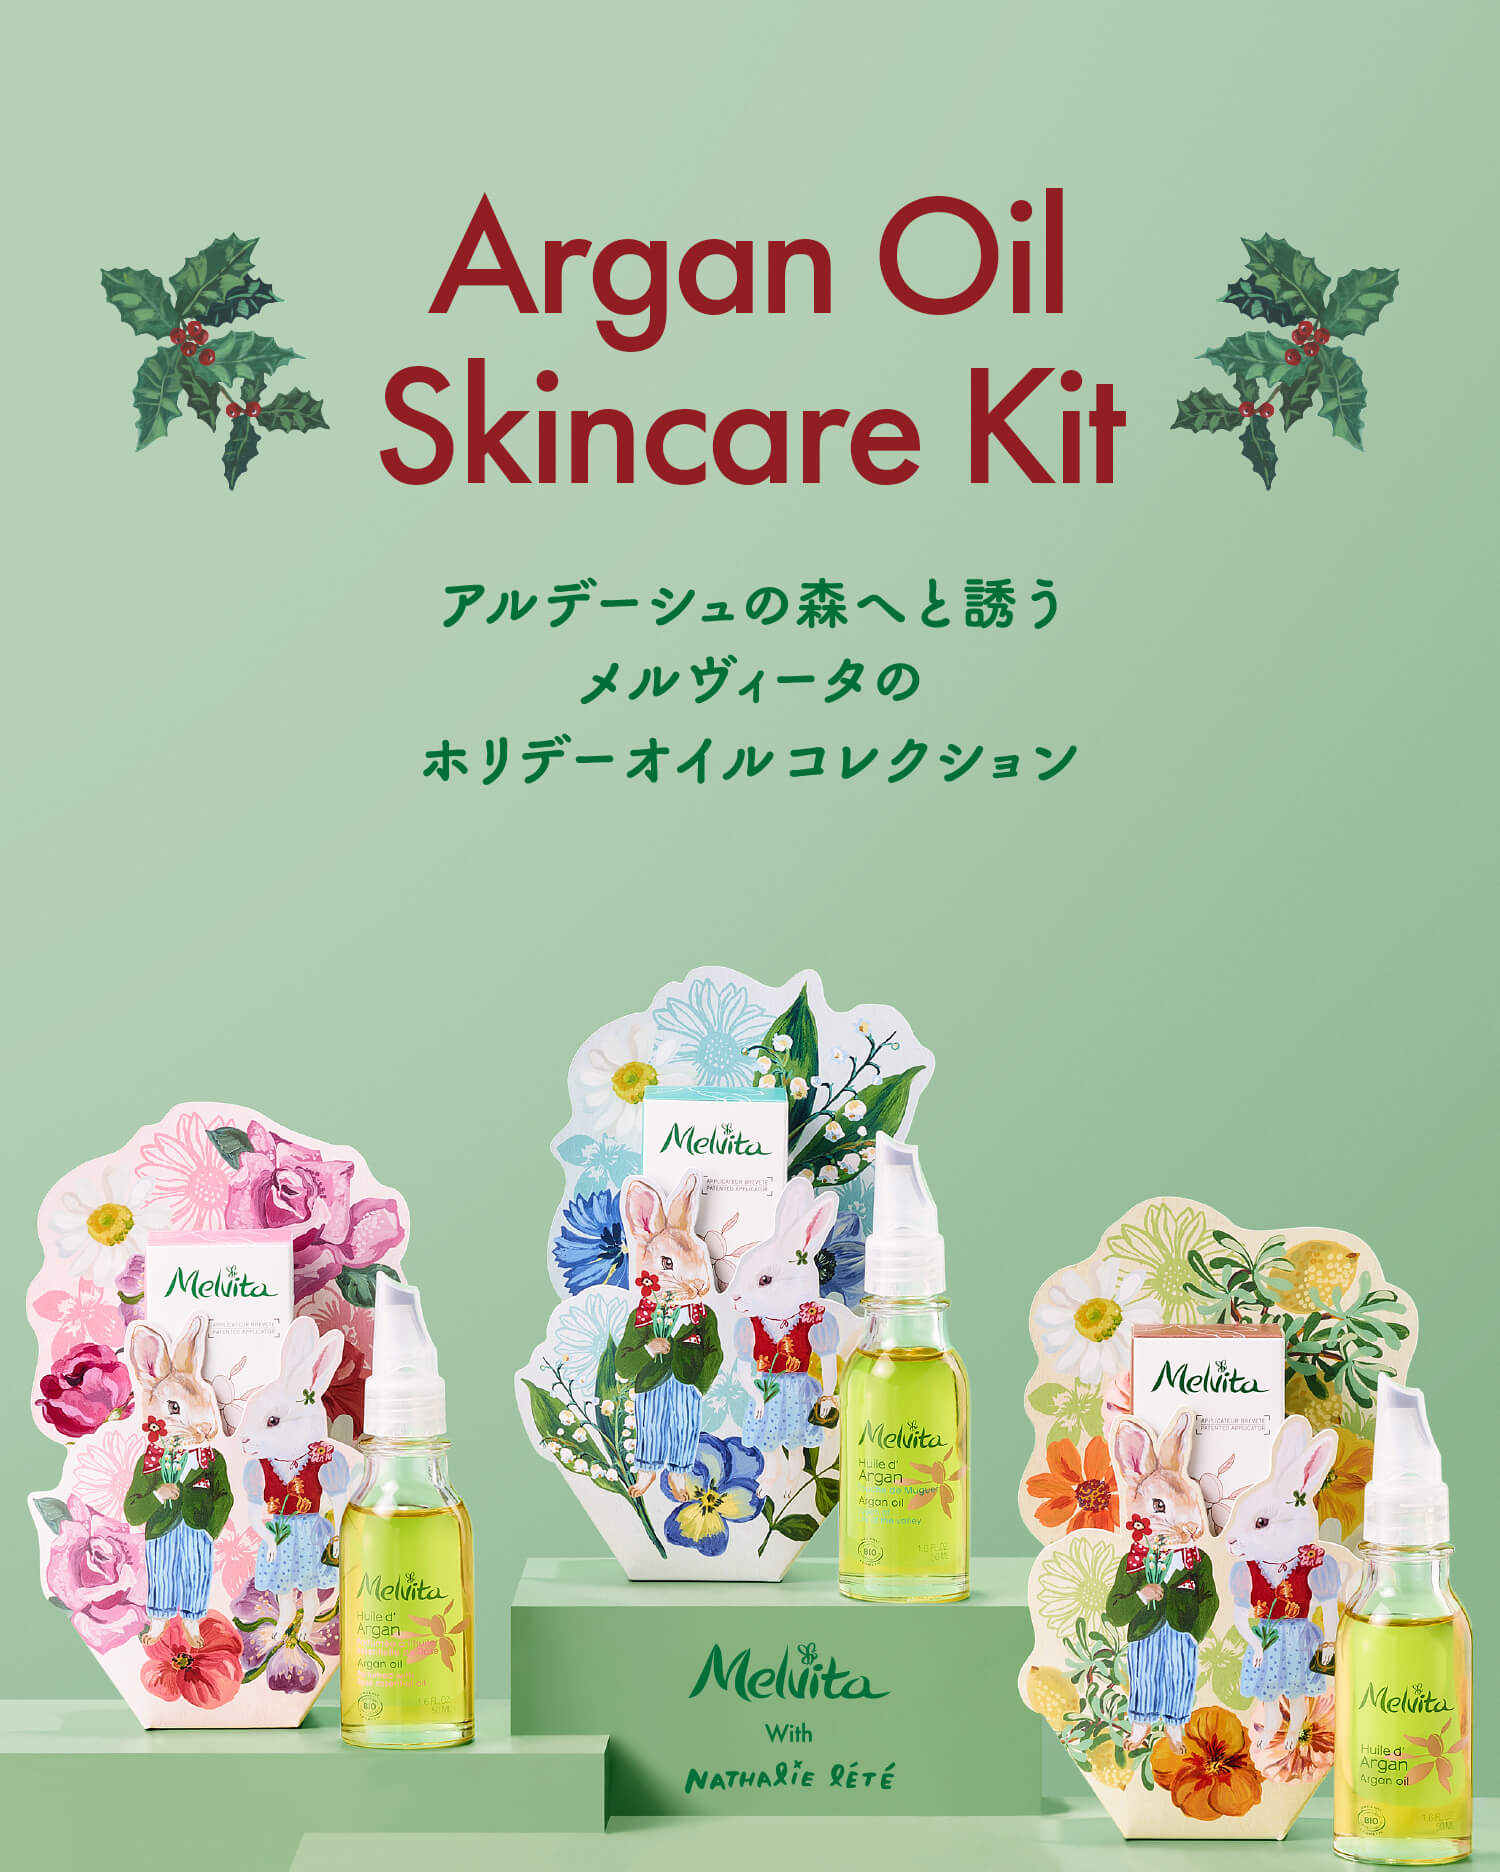 Argan Oil Skincare Kit